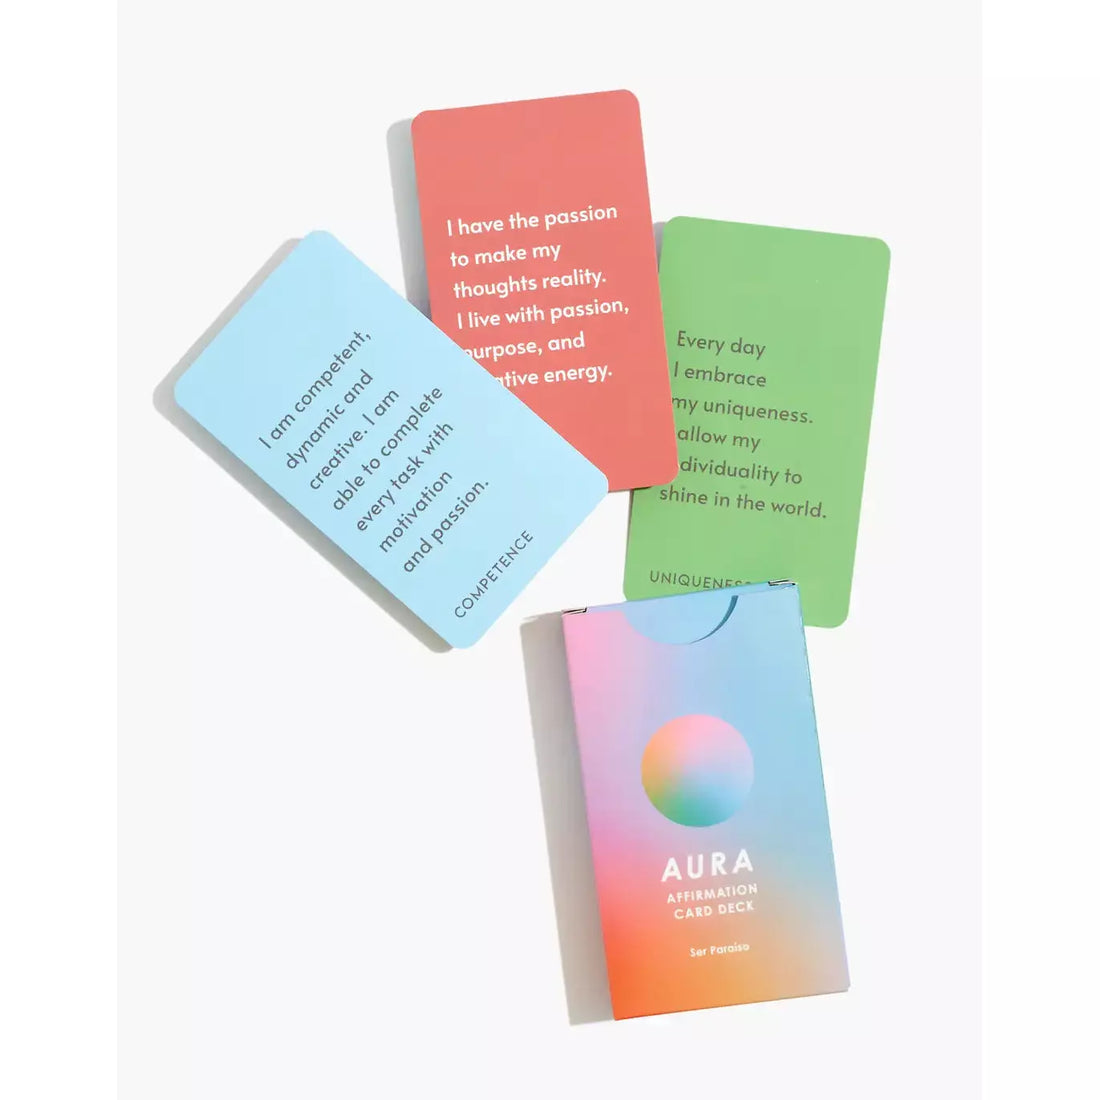 Aura Affirmation Card Deck